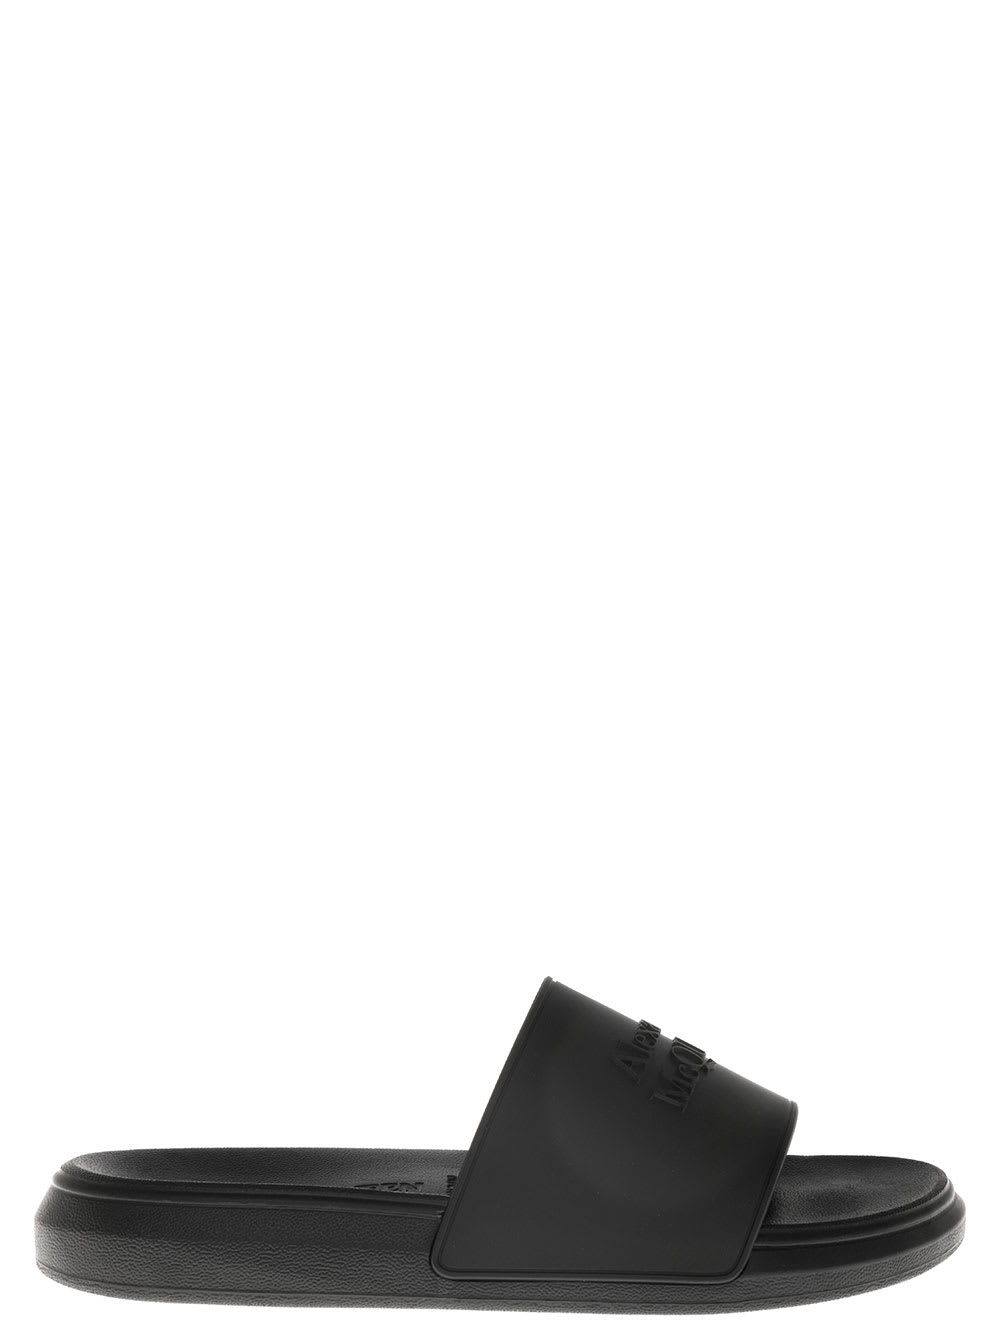 Alexander McQueen Black Rubber Slide Sandals With Logo